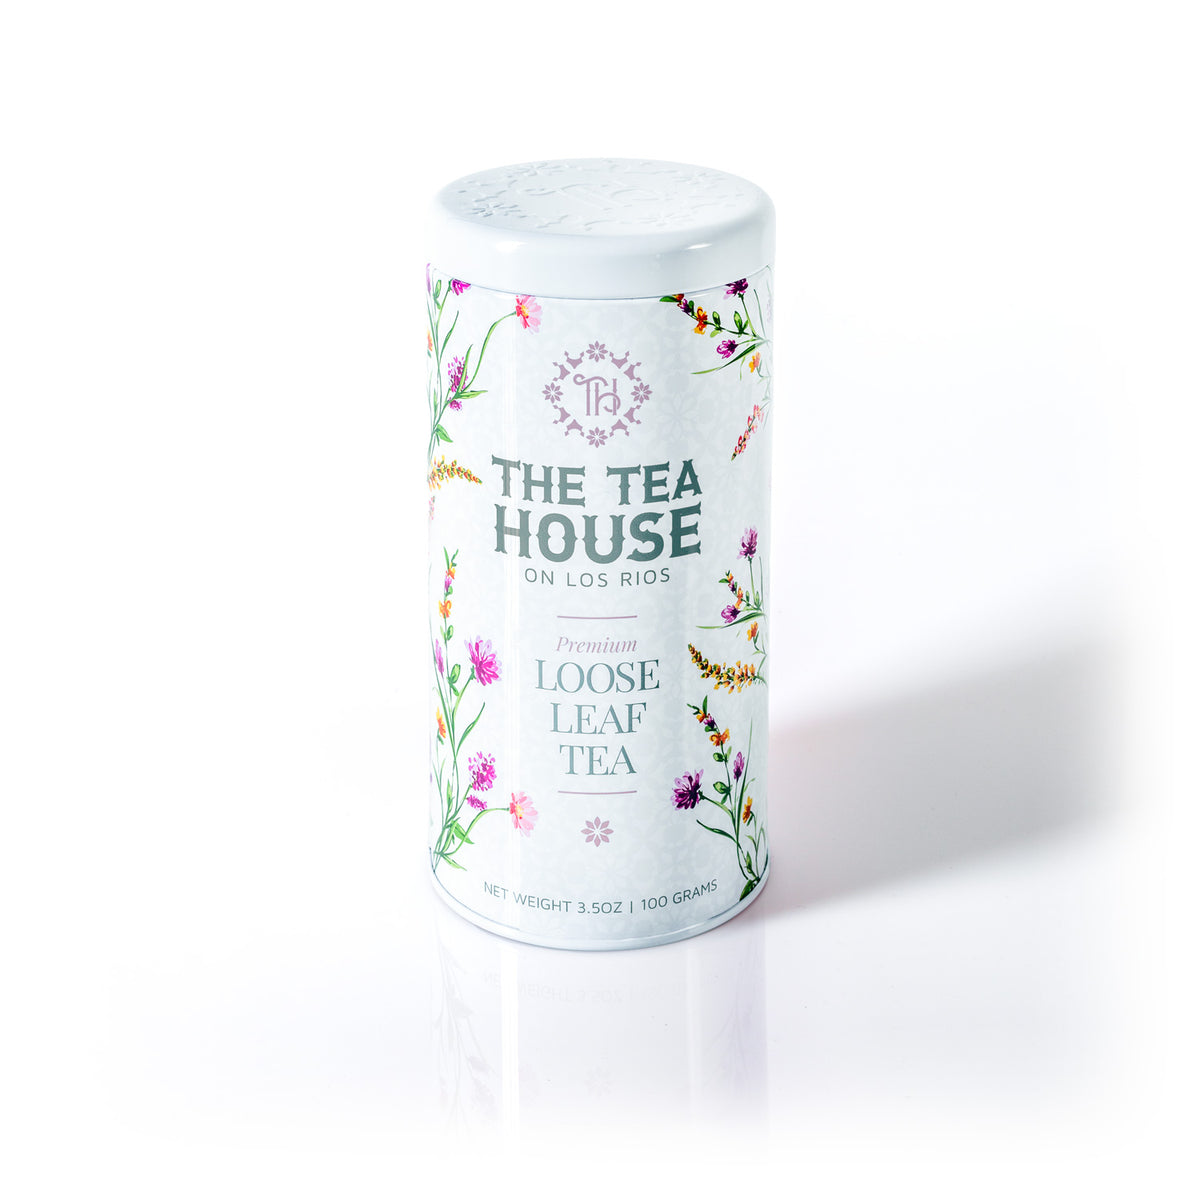 Experience The Tea House on Los Rios with this 100g Loose Leaf Tea Tin